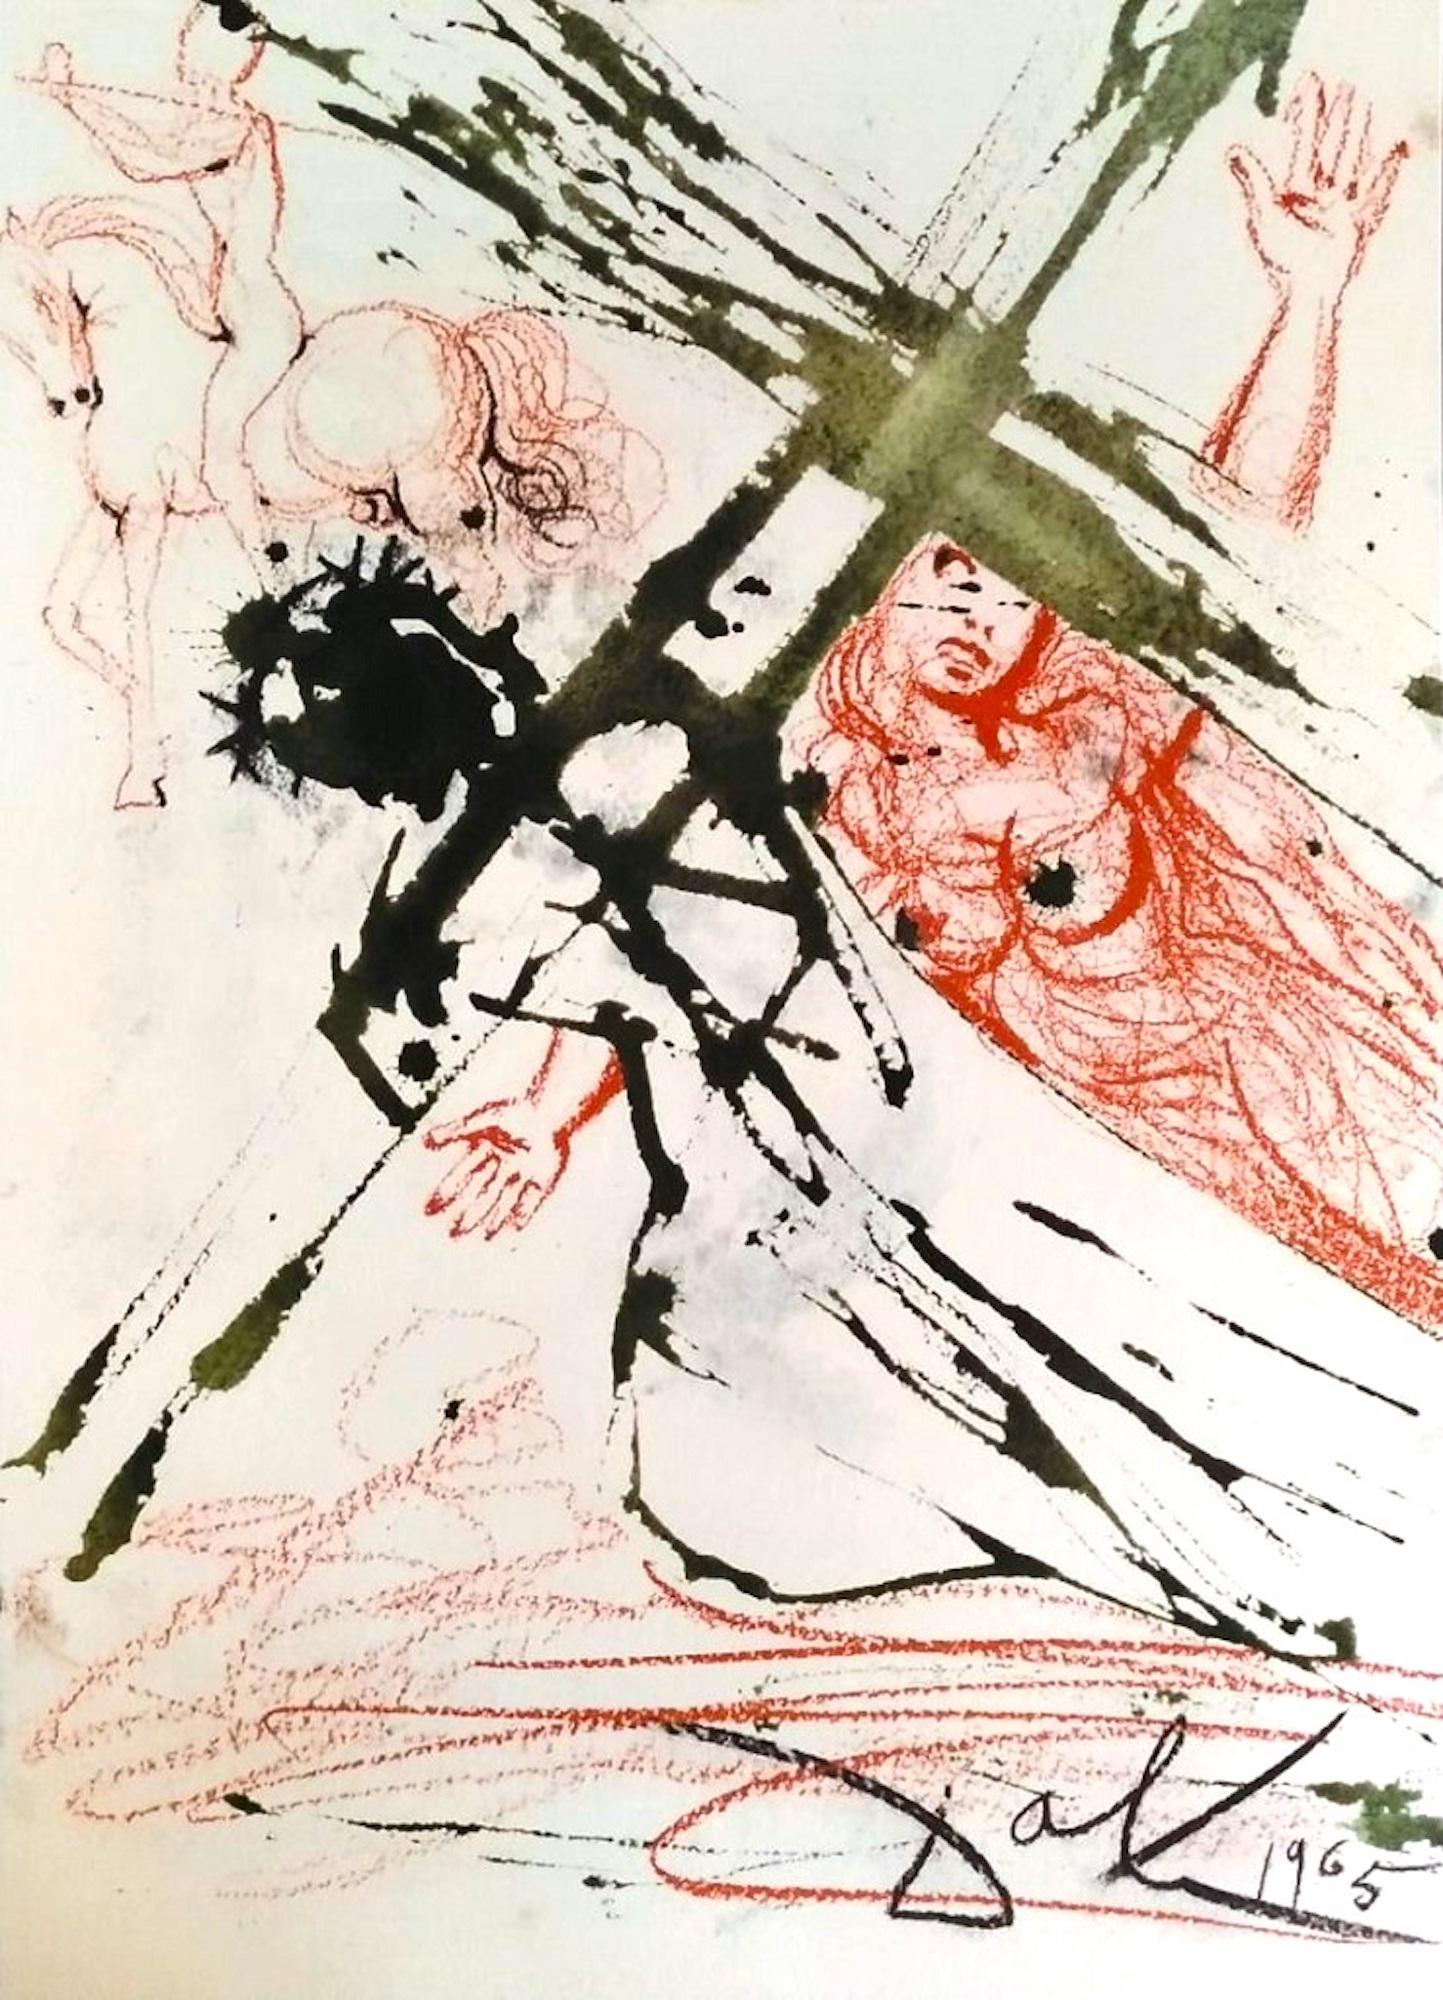 Salvador Dalí Print - Jesus Carrying the Cross - Original Lithograph by Salvador Dalì - 1965